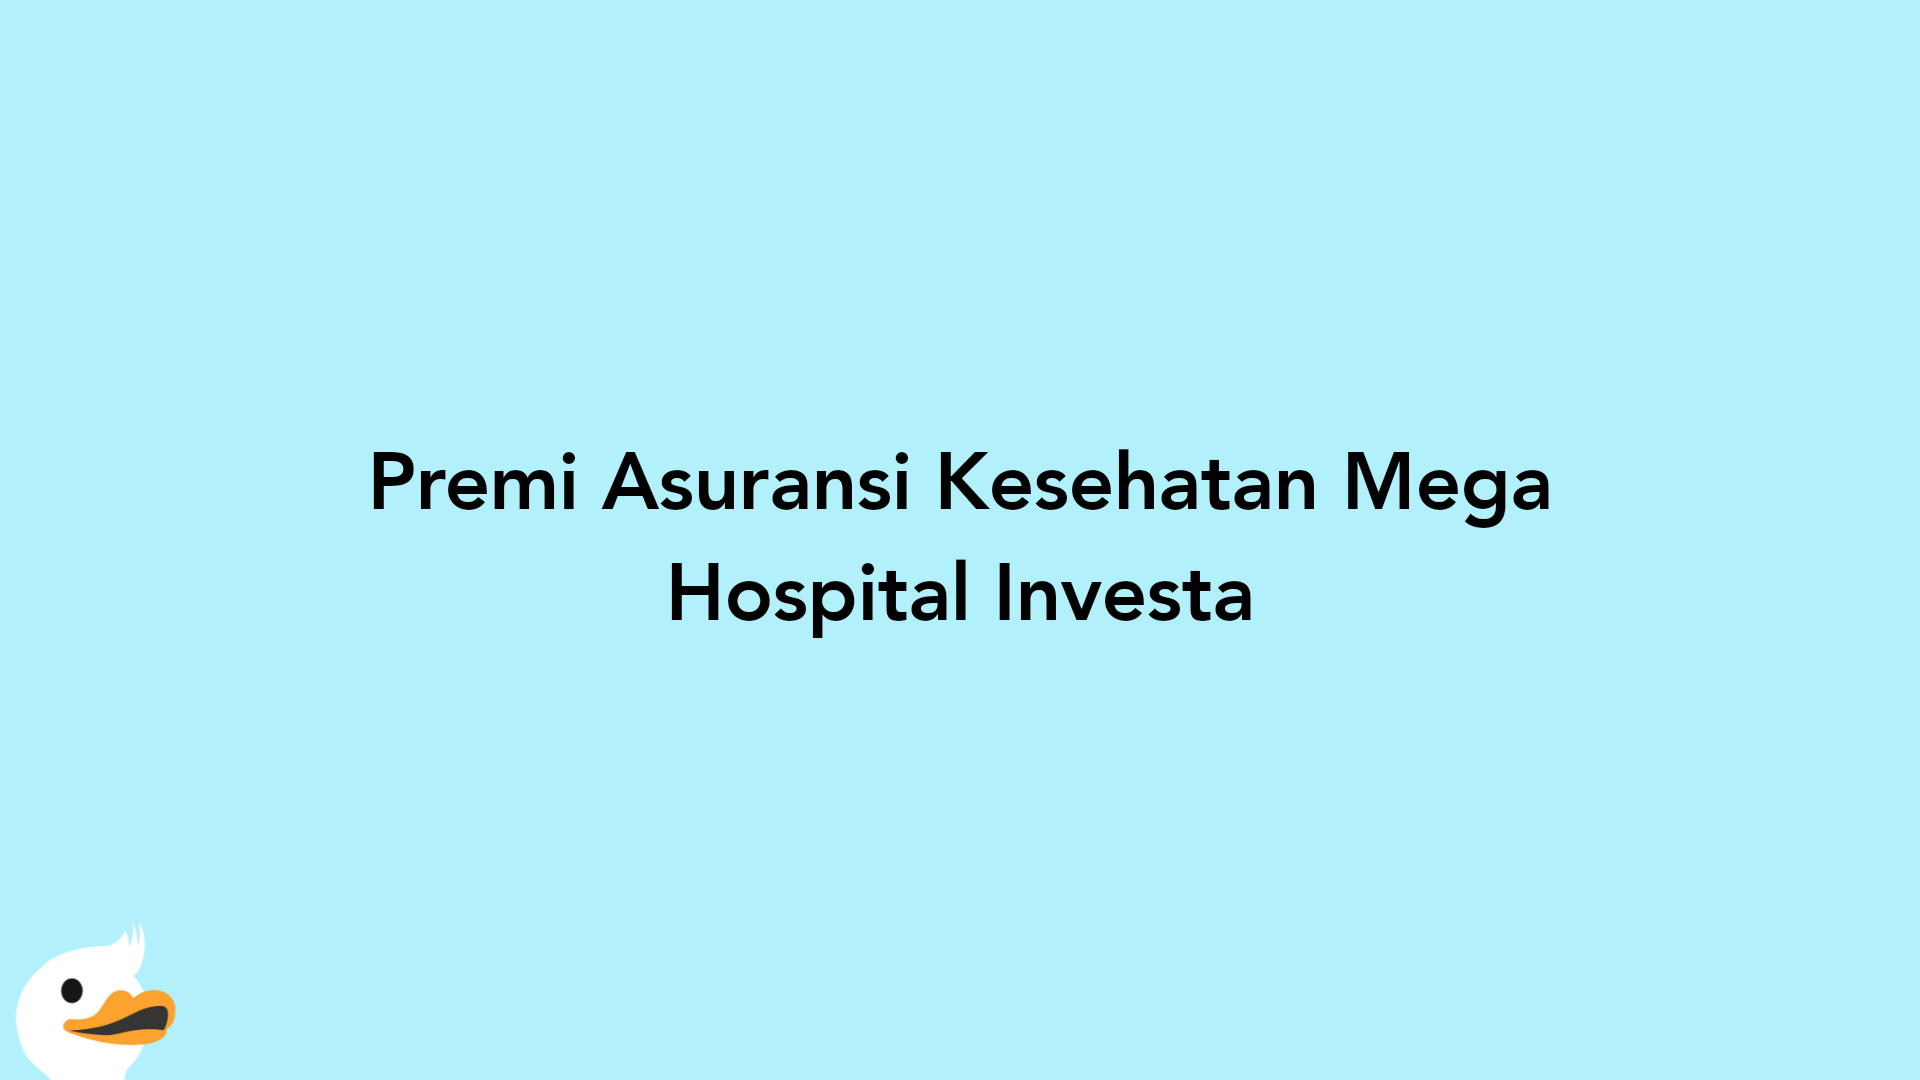 Premi Asuransi Kesehatan Mega Hospital Investa